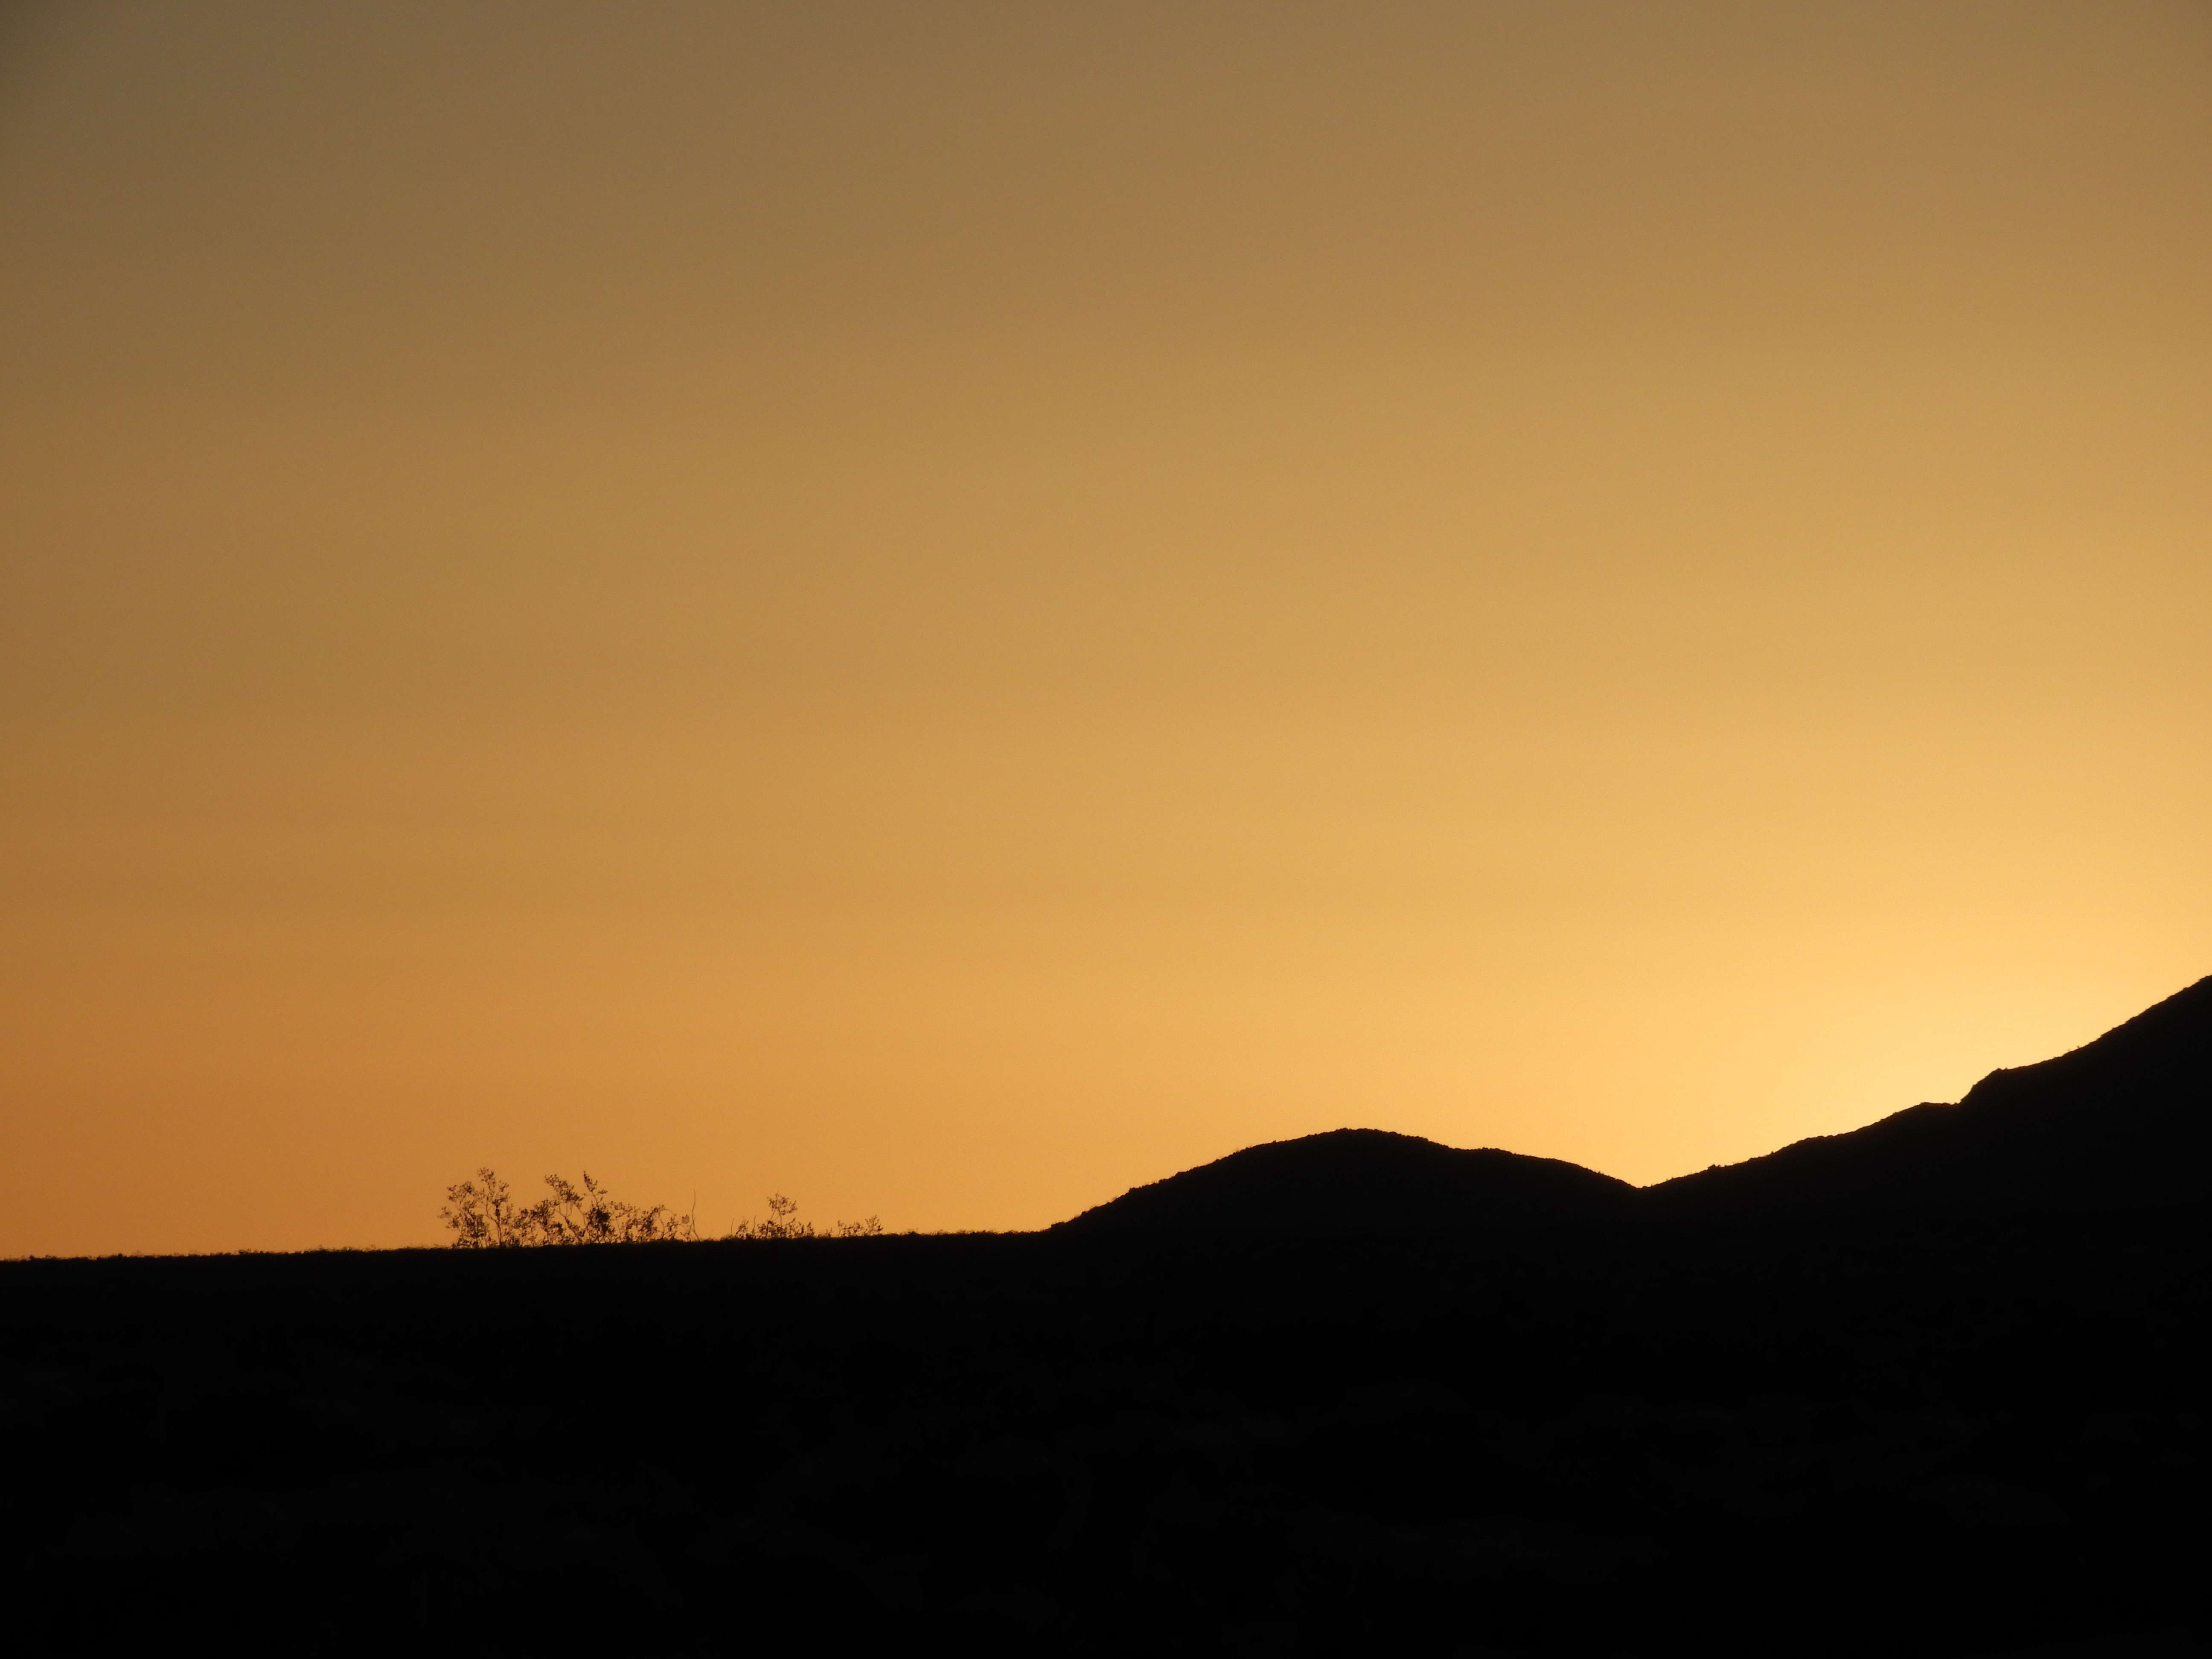 Sunrise seen in Joshua Tree National Park in California